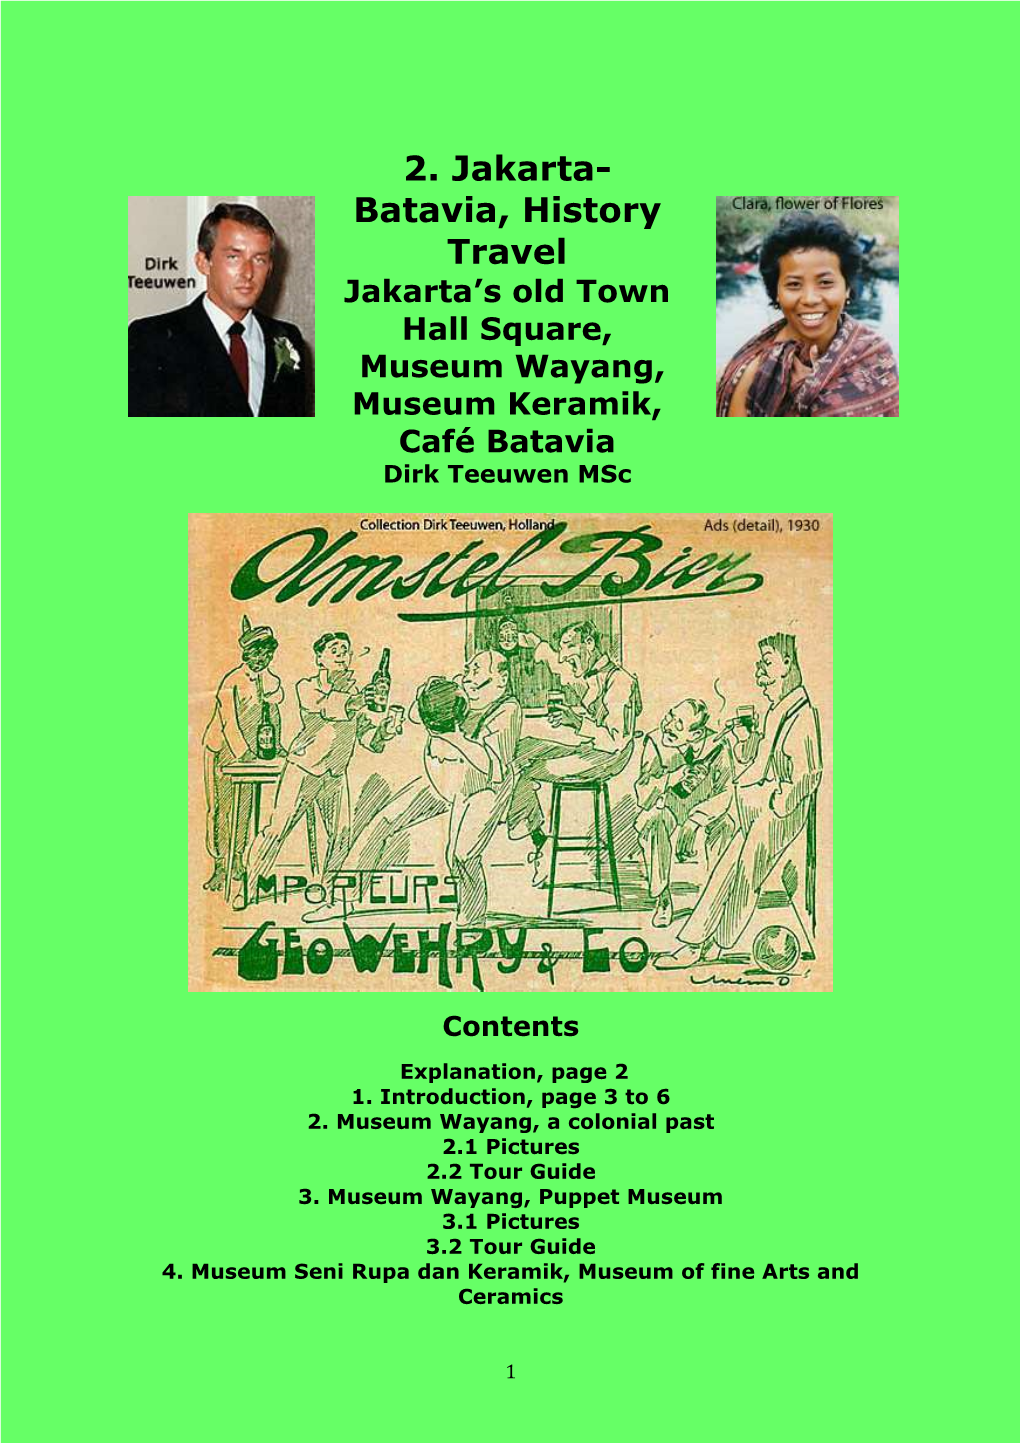 2. Jakarta- Batavia, History Travel